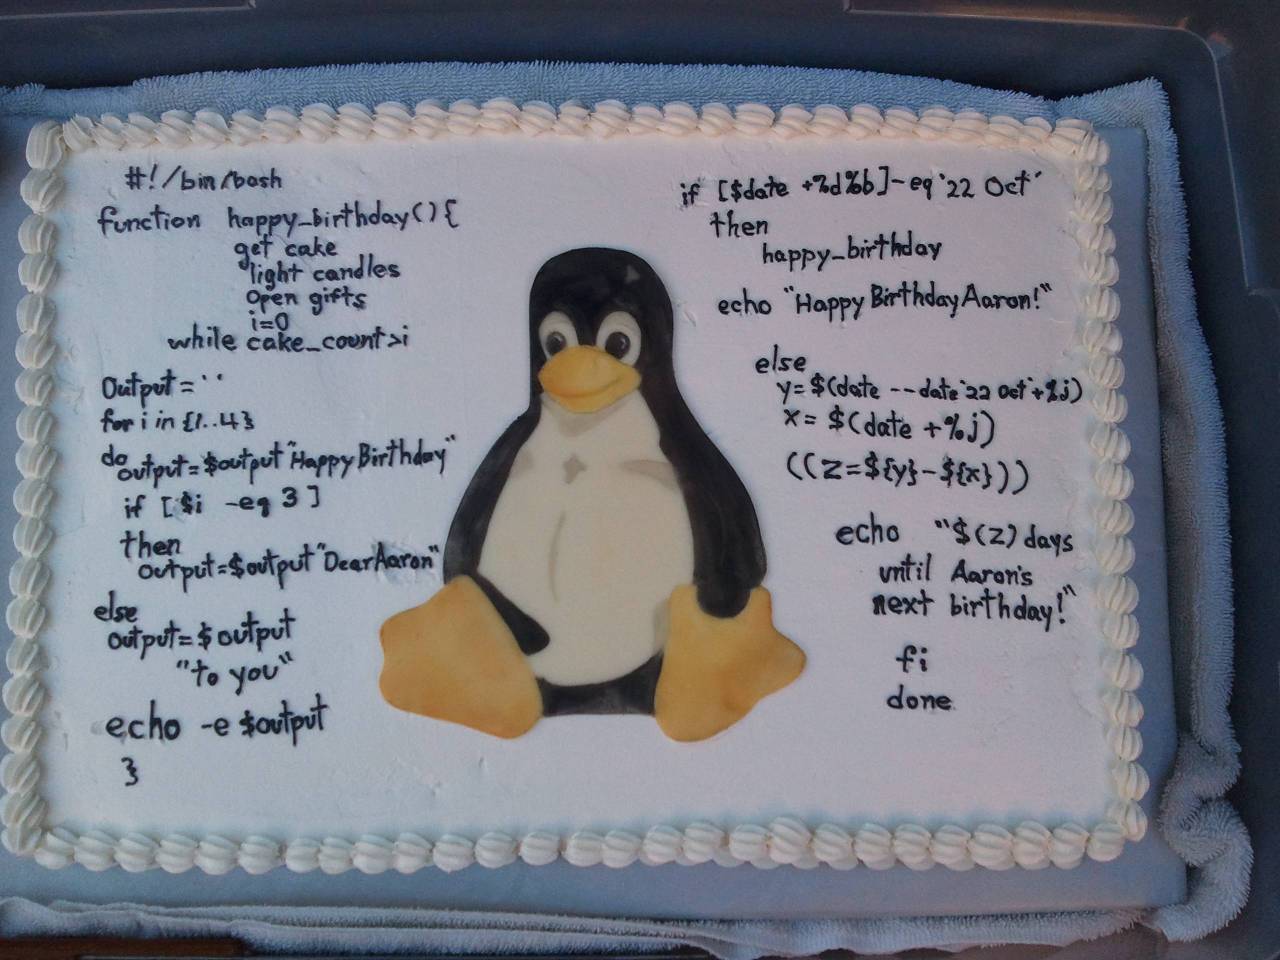 braindead:
“  Linux cake (repost?) http://i.imgur.com/H8xpJhD.jpg via http://imgur.com/gallery/BifHL
”